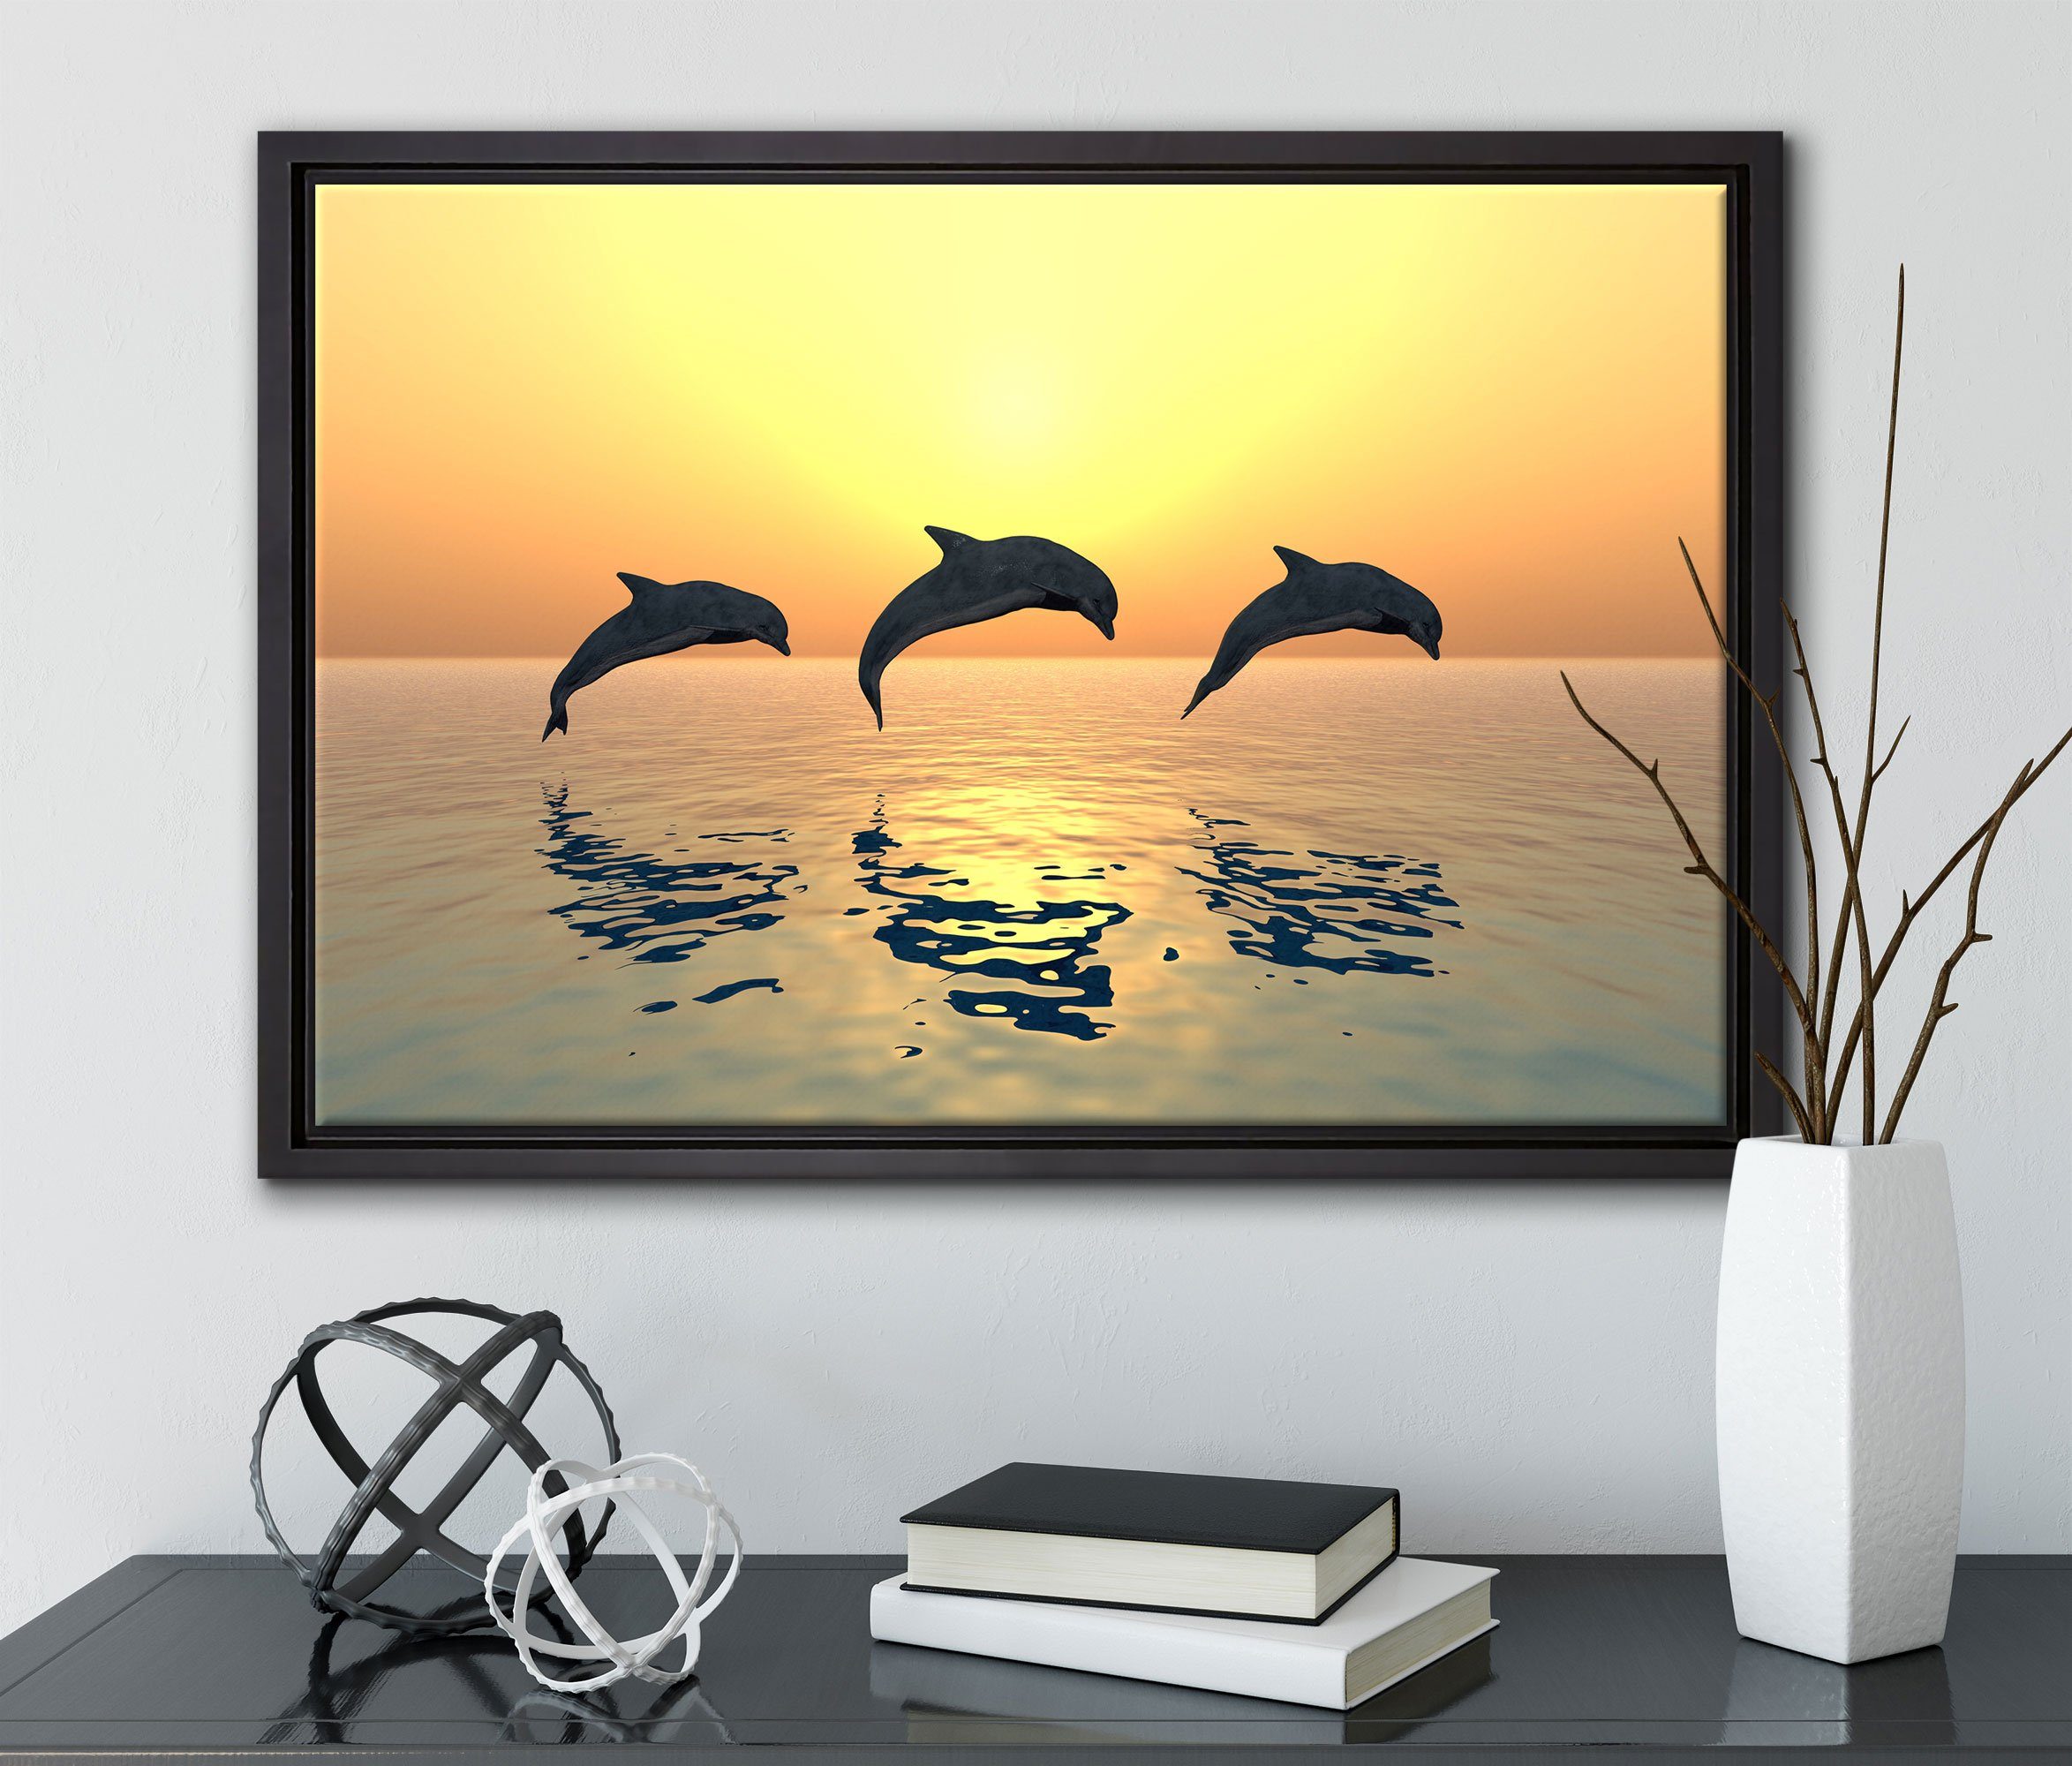 Pixxprint Leinwandbild Delfine im inkl. in einem Sonnenuntergang, gefasst, St), Schattenfugen-Bilderrahmen bespannt, Zackenaufhänger Leinwandbild fertig (1 Wanddekoration